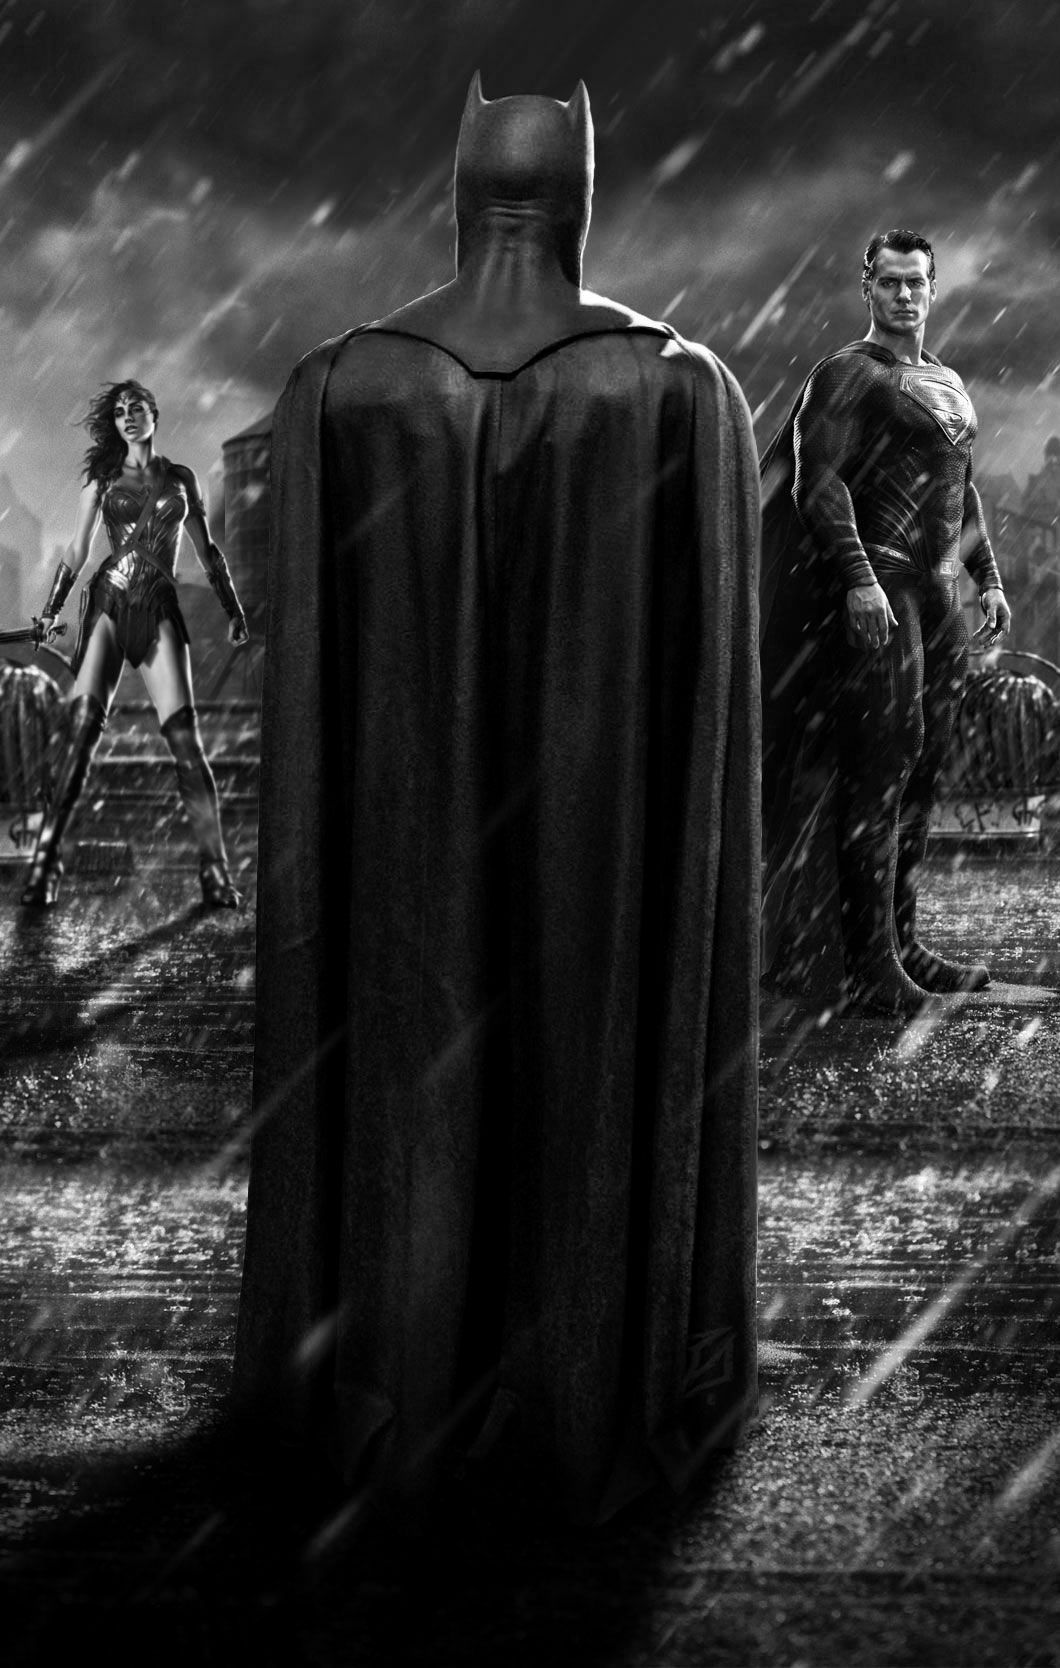 Batman vs superman dawn of justice Full HD wallpapers for PC ...